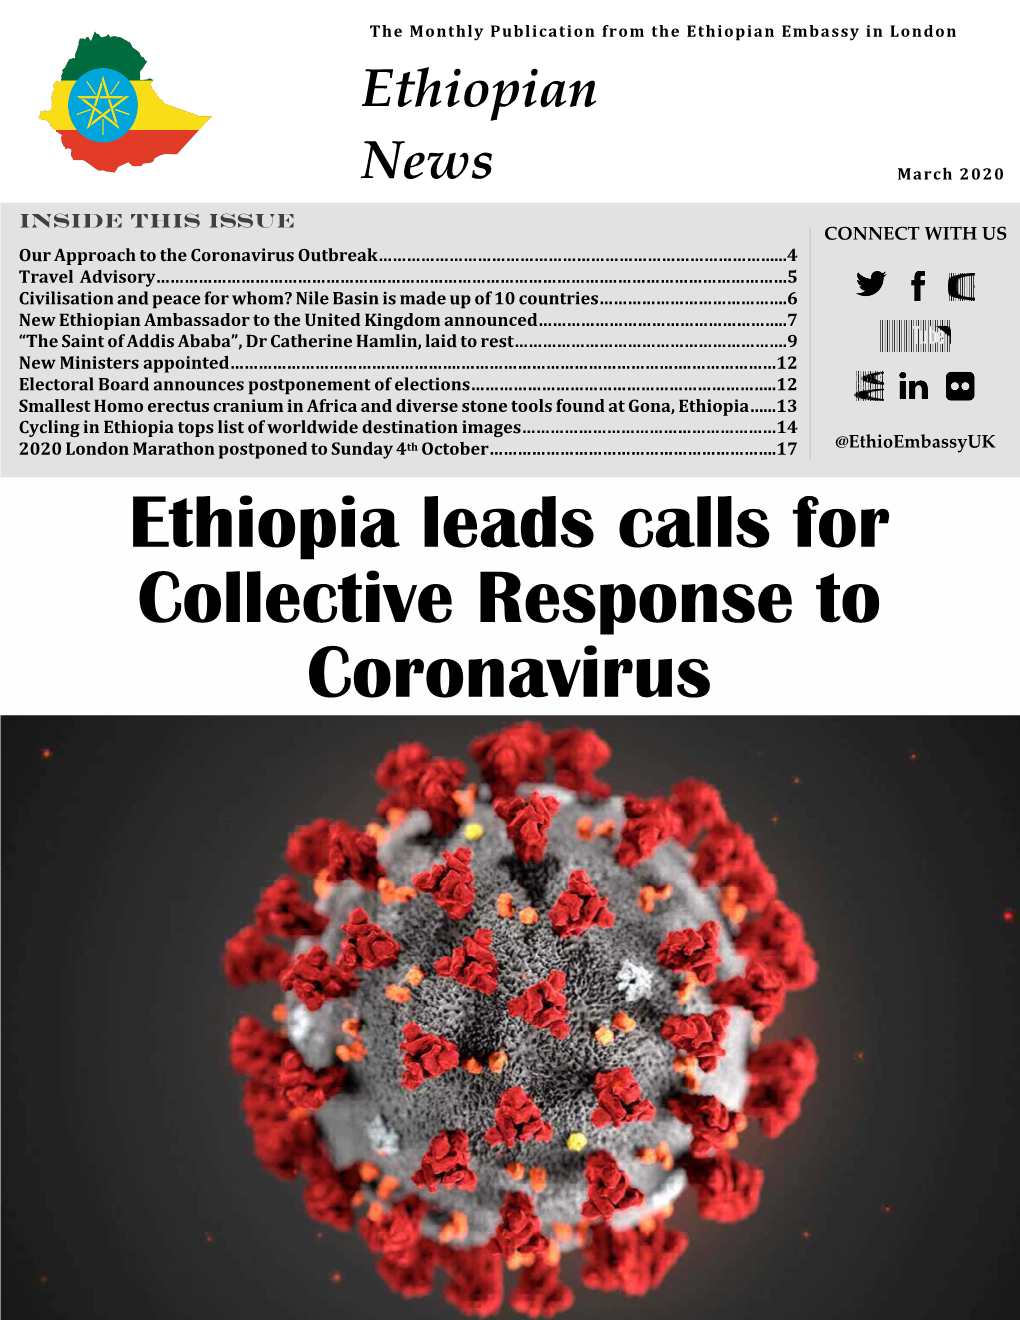 Ethiopia Leads Calls for Collective Response to Coronavirus